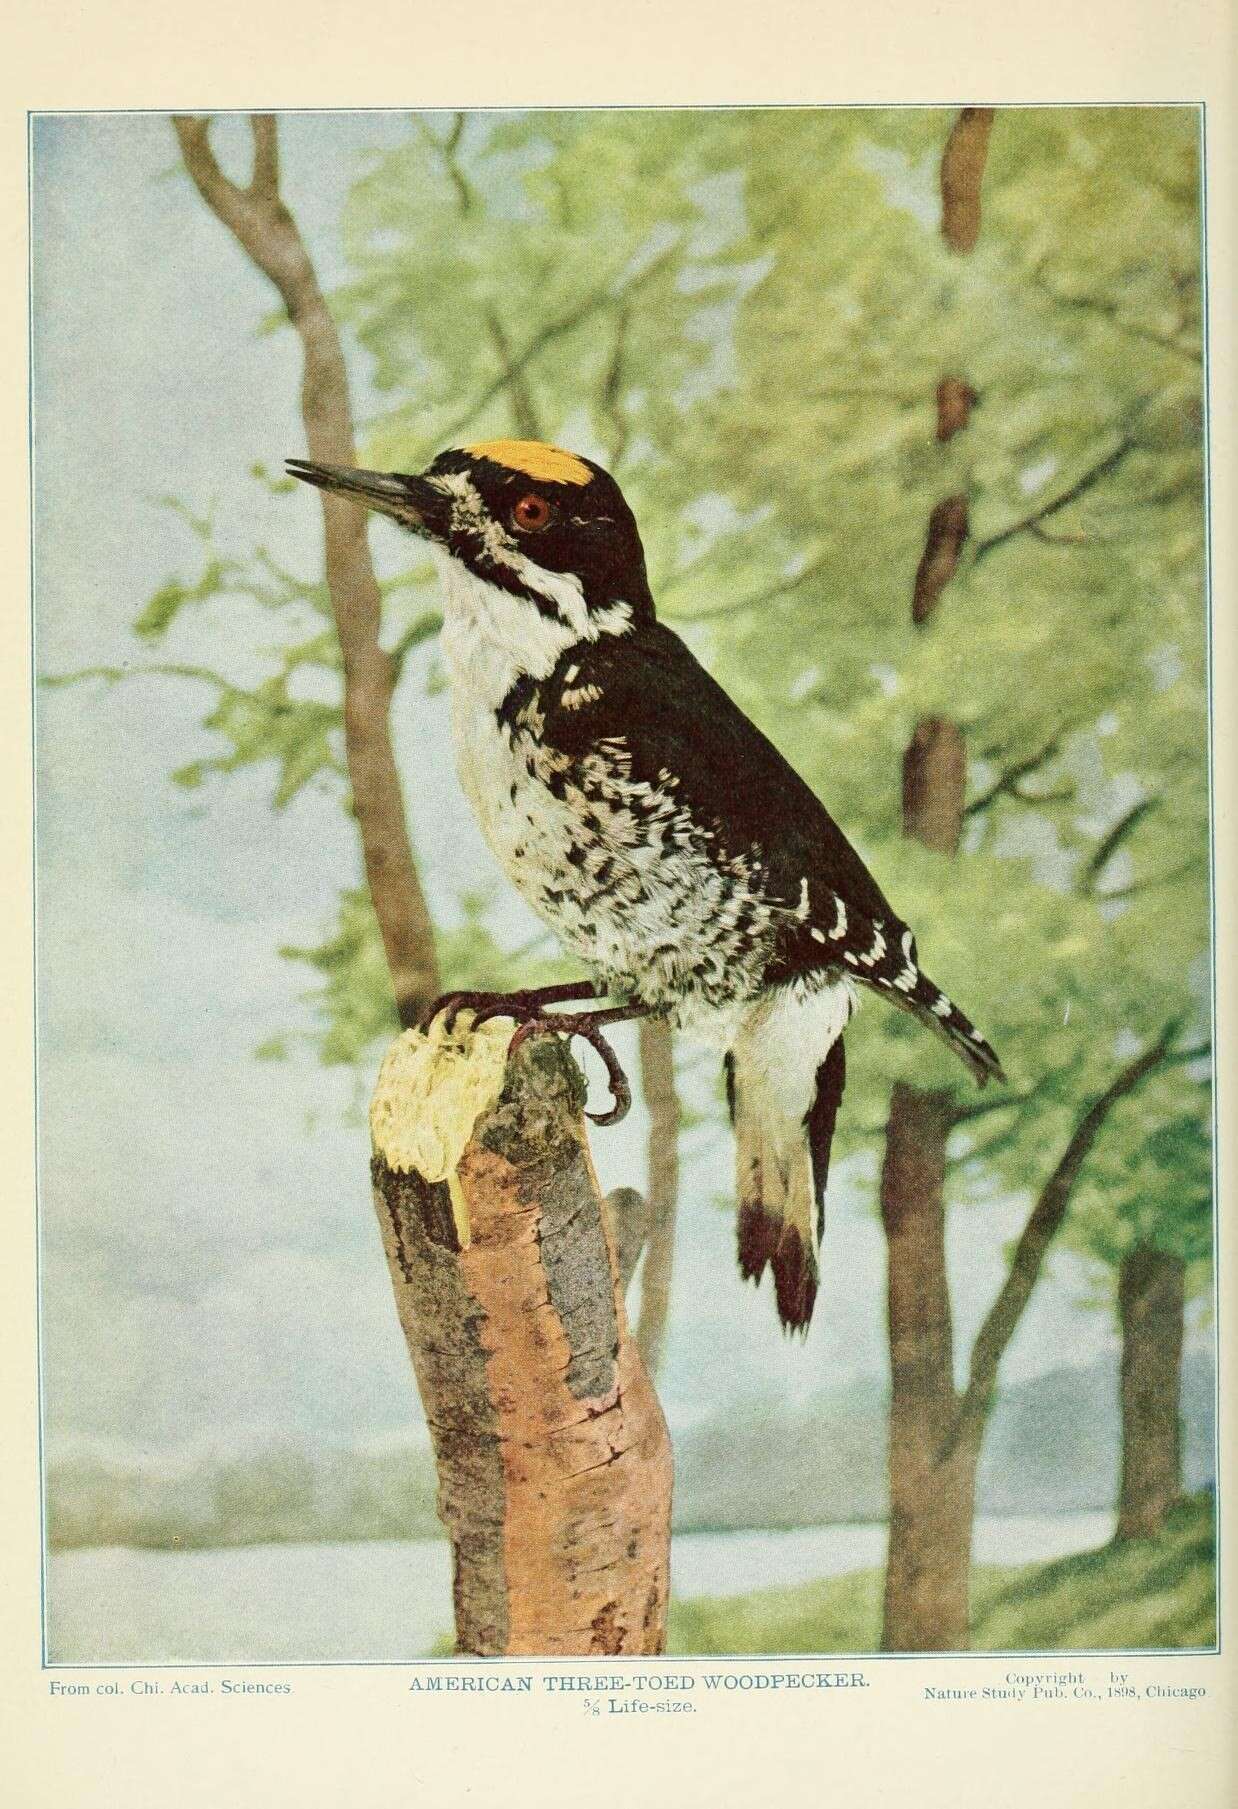 Image of Black-backed Woodpecker